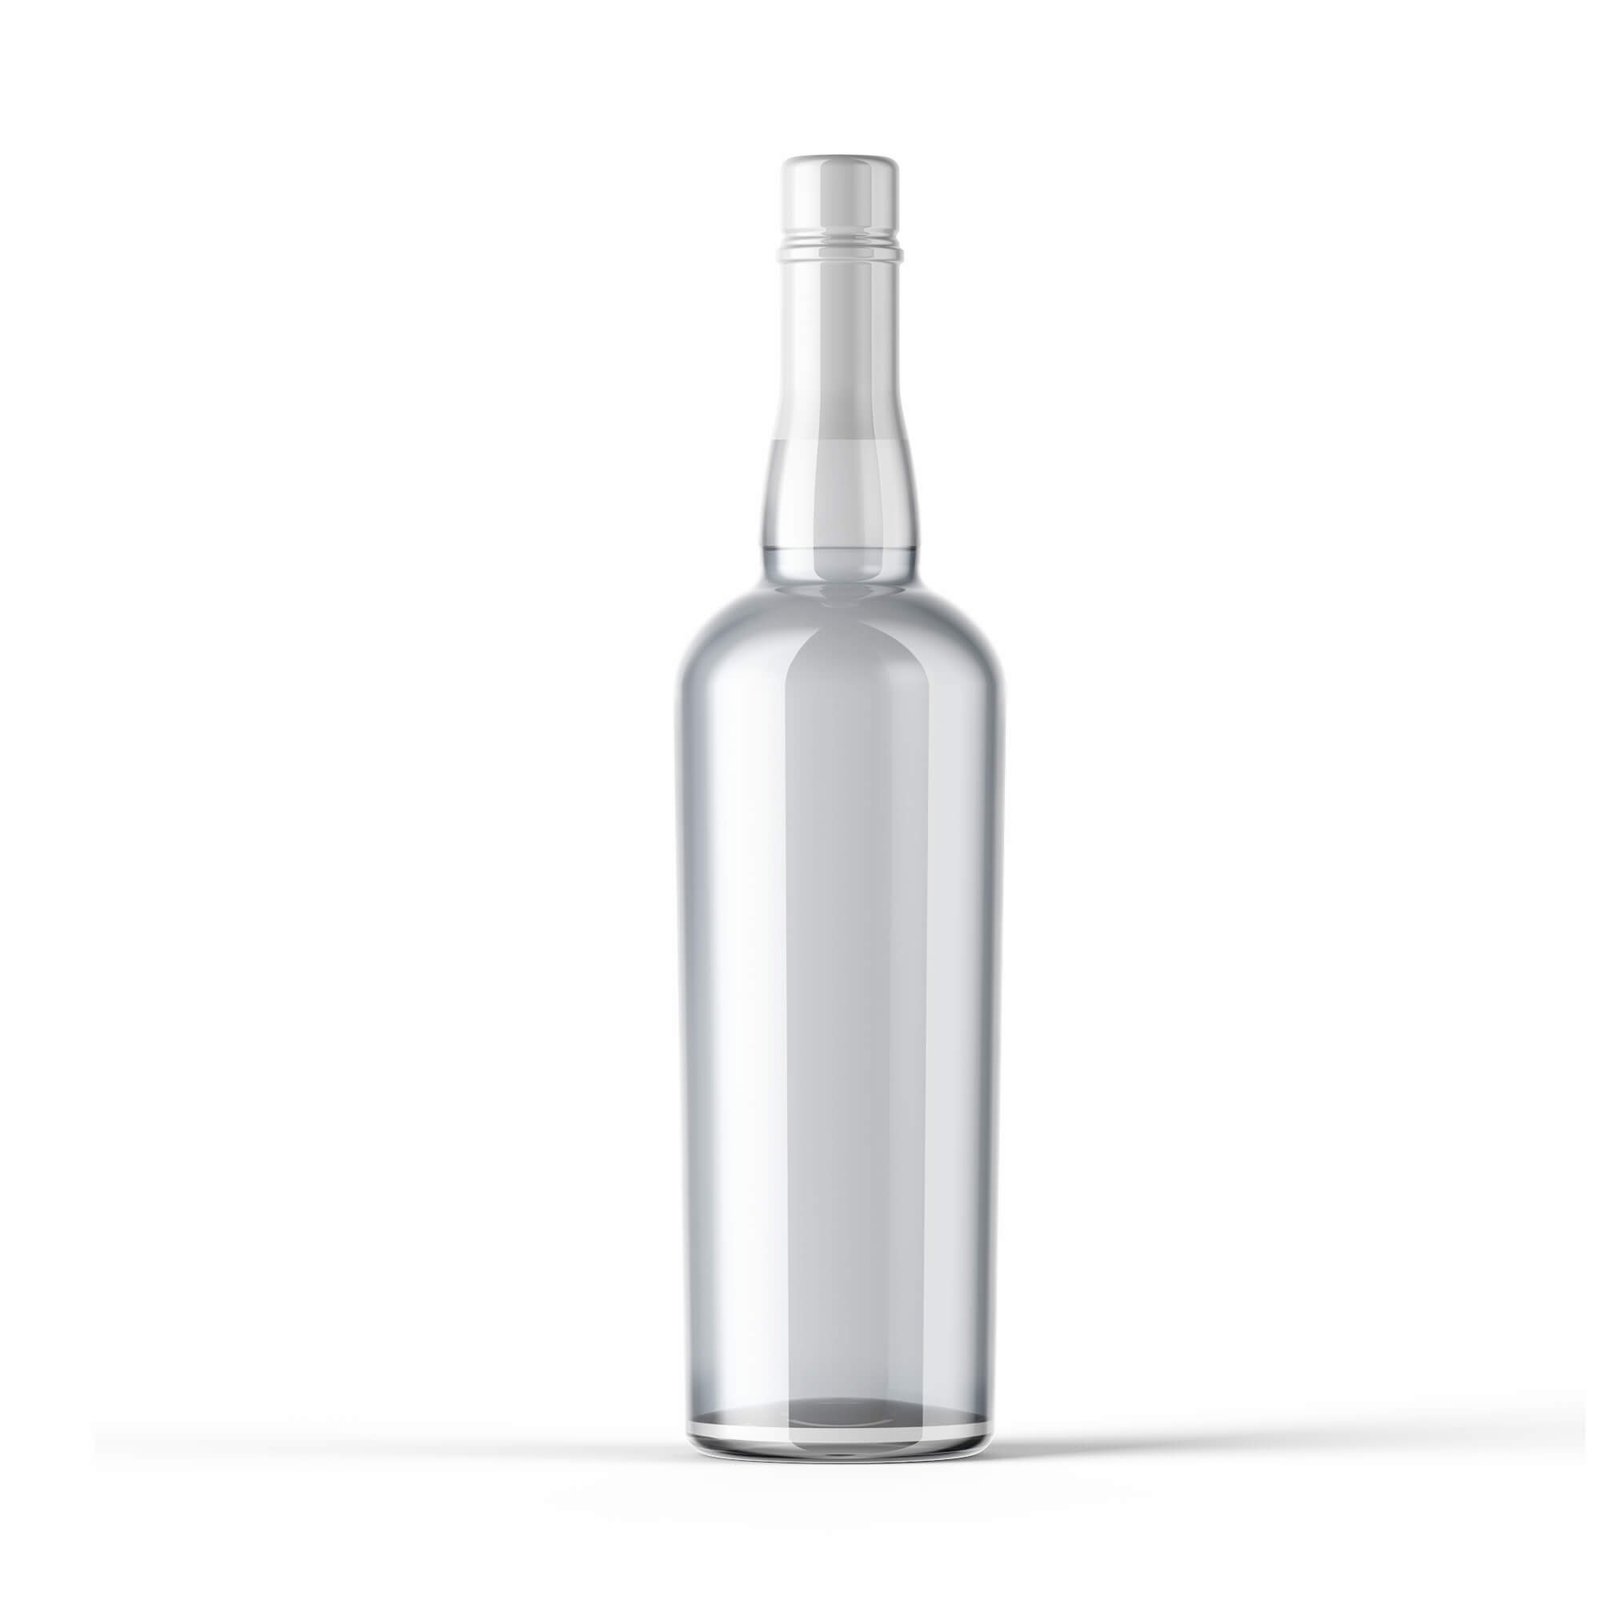 Blank Free Alcohol Bottle Mockup PSD Template (2)